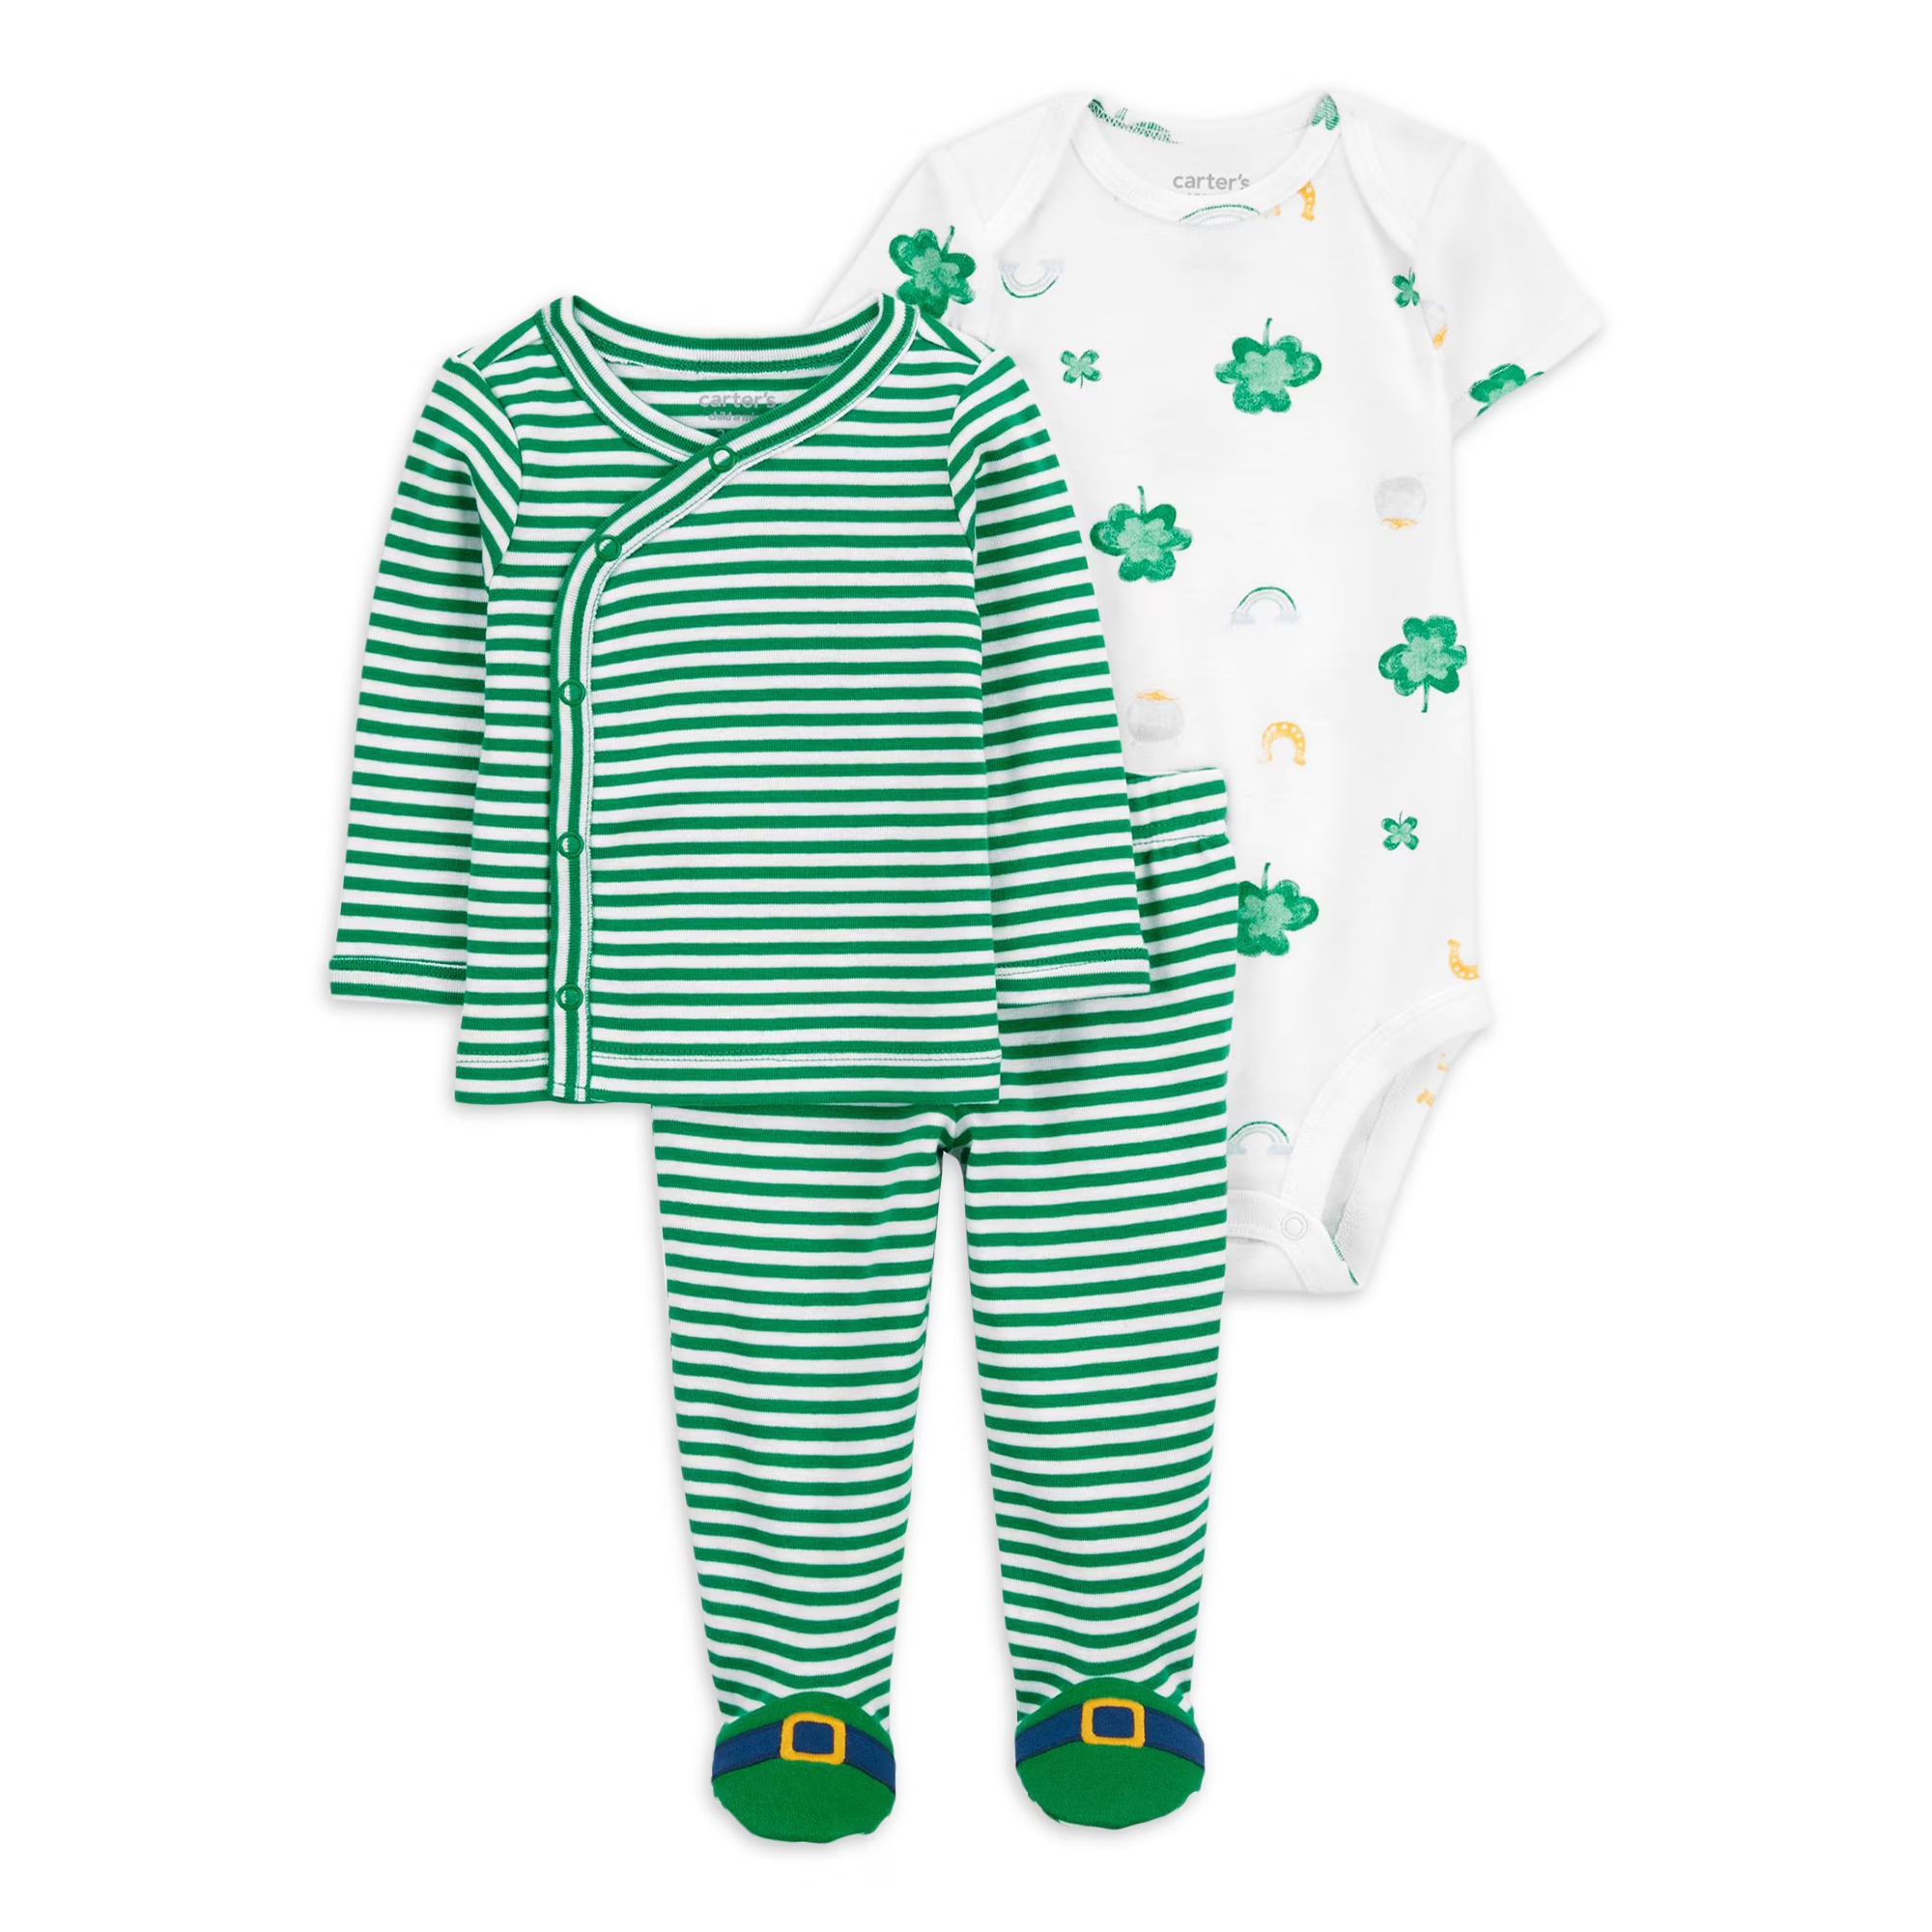 Carter's Child of Mine Baby Unisex St. Patrick's Outfit Set, 3-Piece, Sizes Preemie-6/9 Months | Walmart (US)